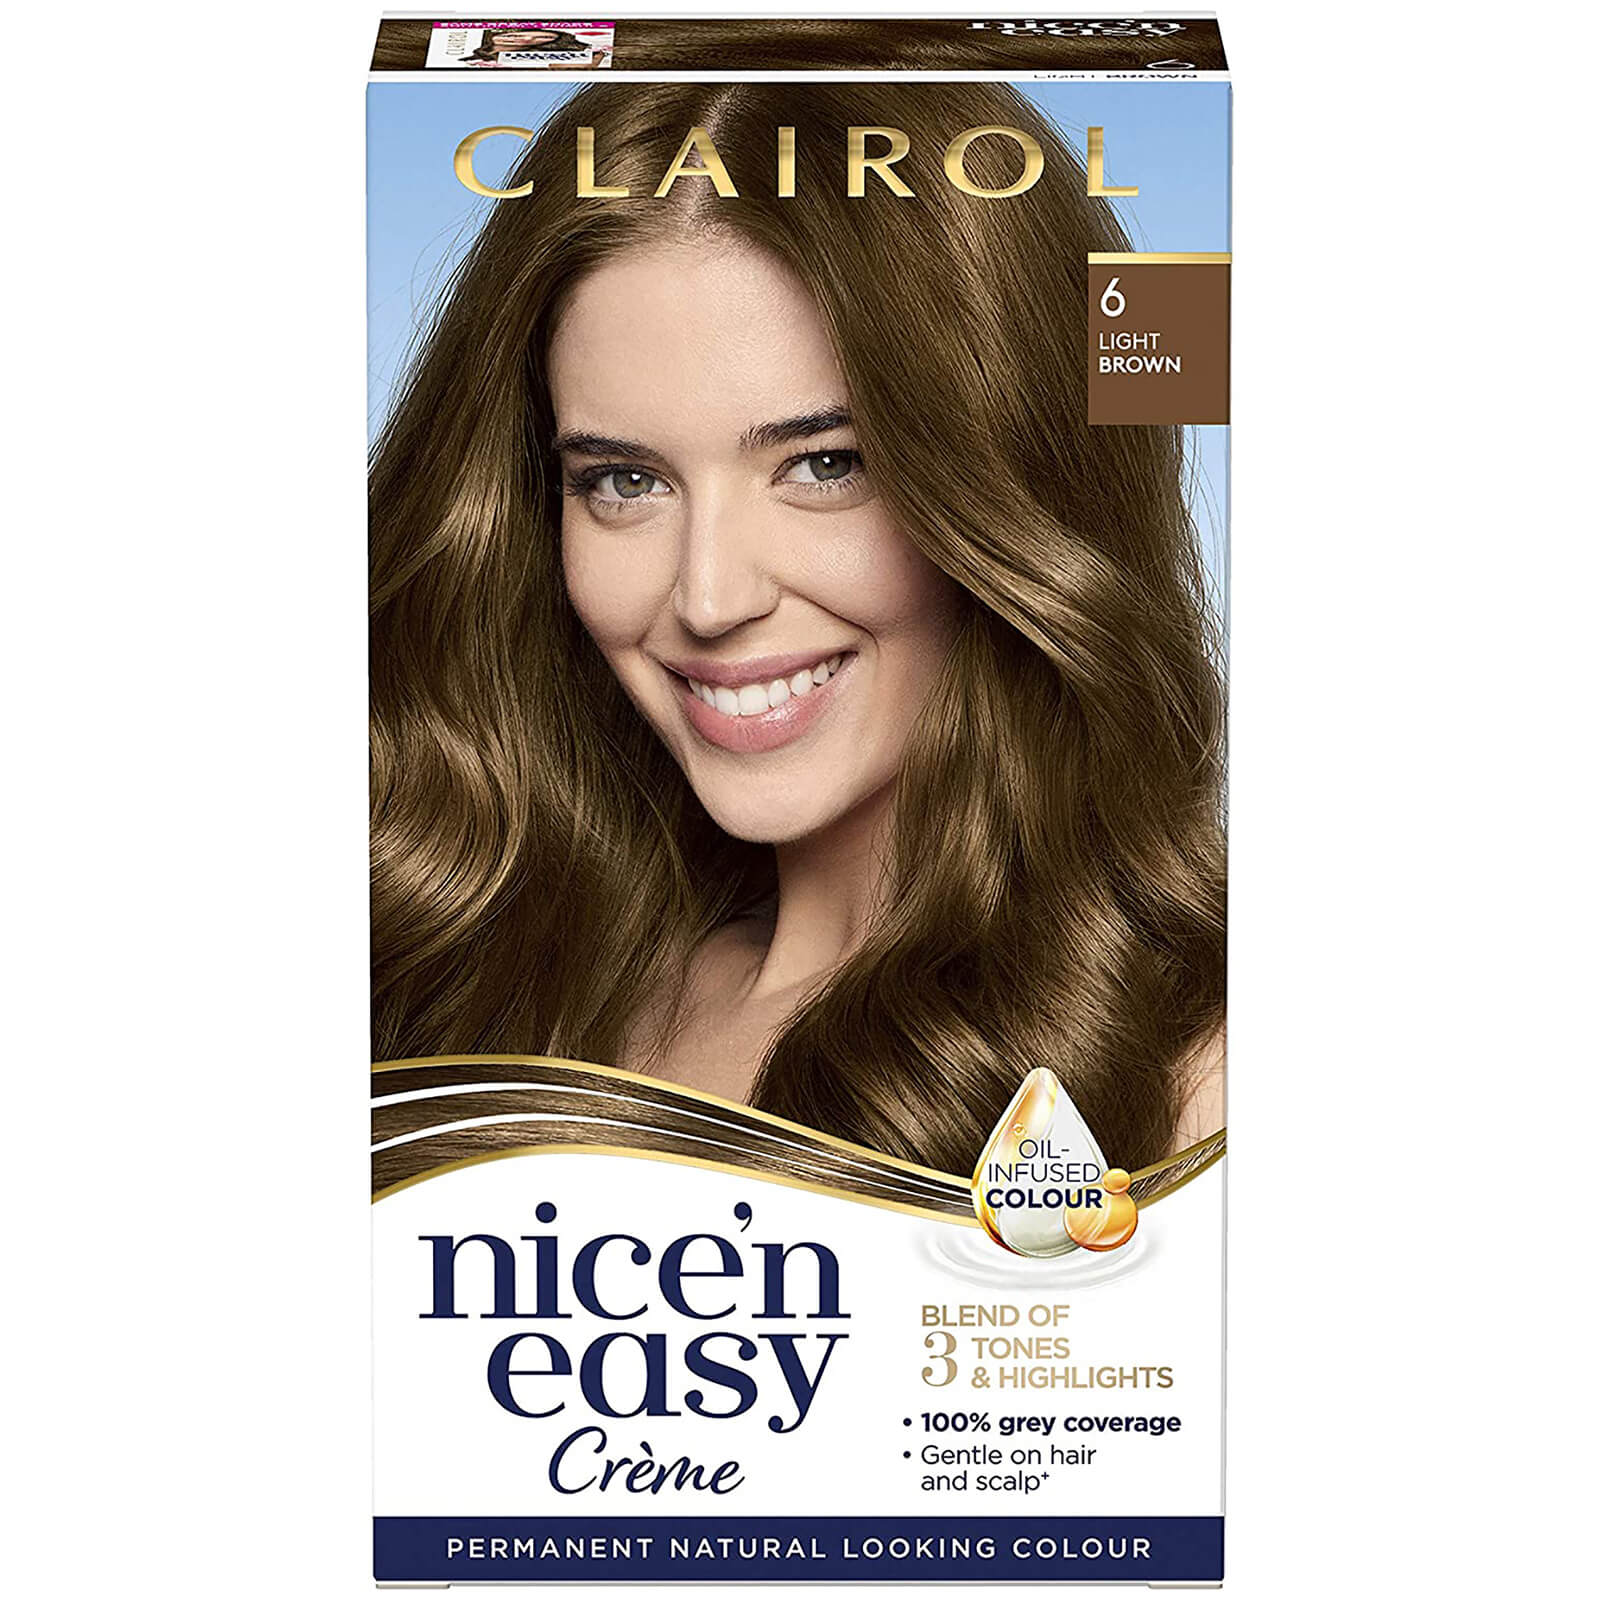 Clairol Nice' n Easy Crème Natural Looking Oil Infused Permanent Hair Dye 177ml (Various Shades) - 6 Light Brown